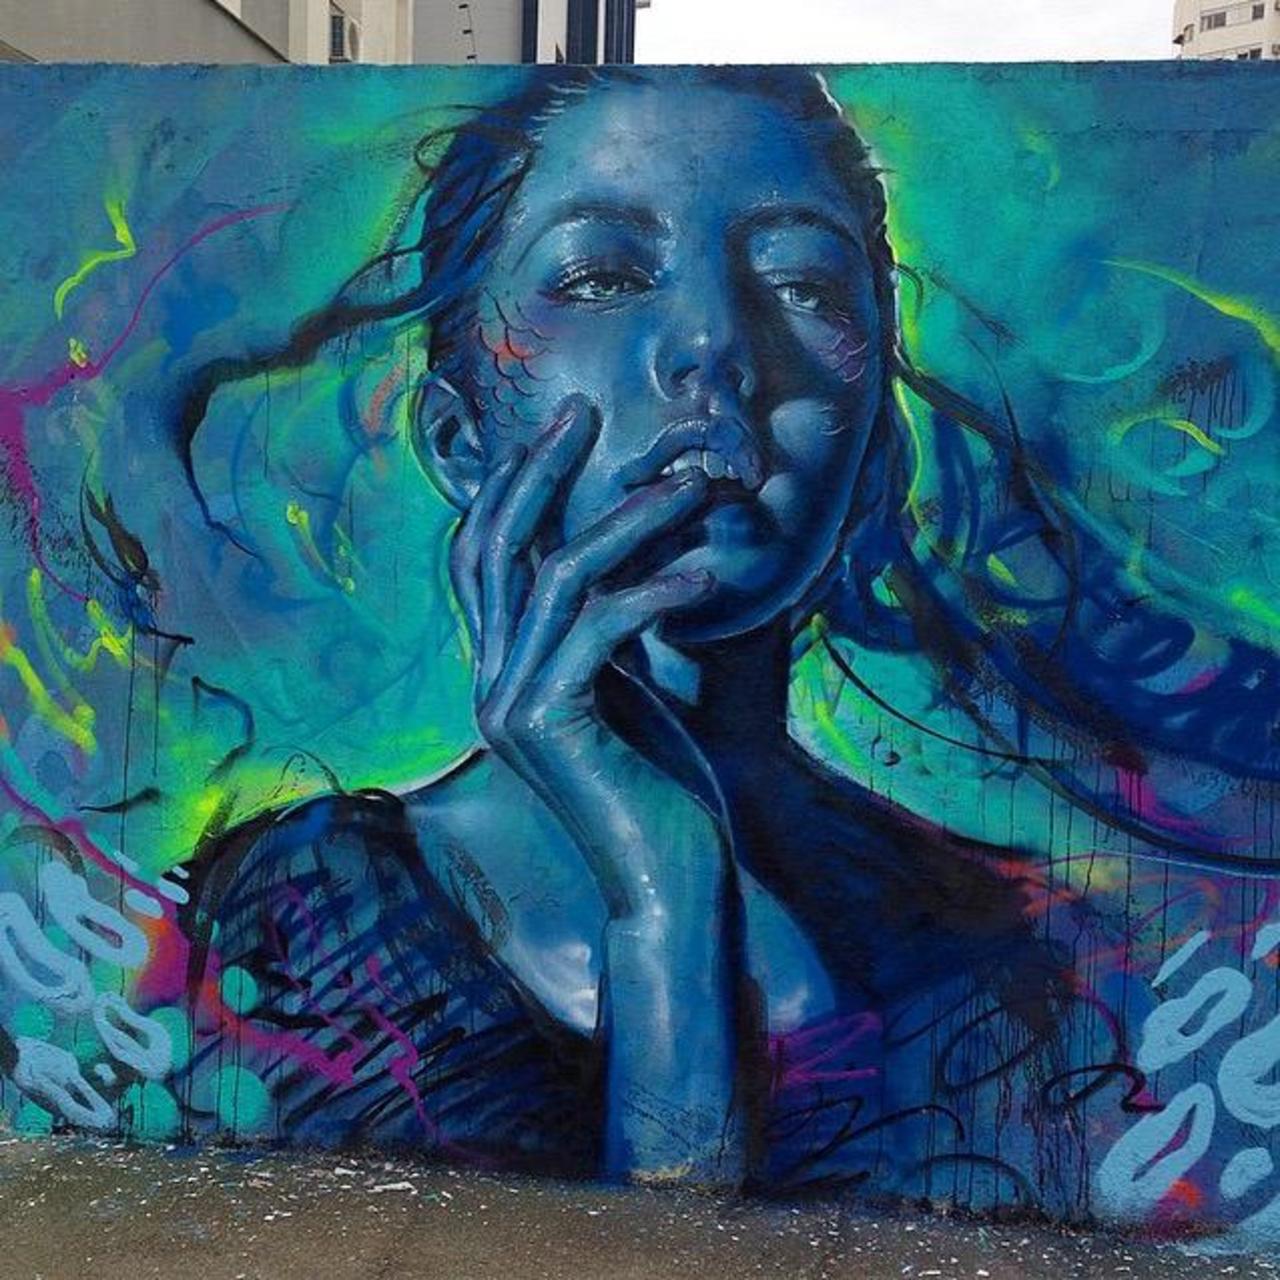 Thiago Valdi new Street Art piece titled 'Day Dreamer'

#art #mural #graffiti #streetart http://t.co/LYPizL20V3